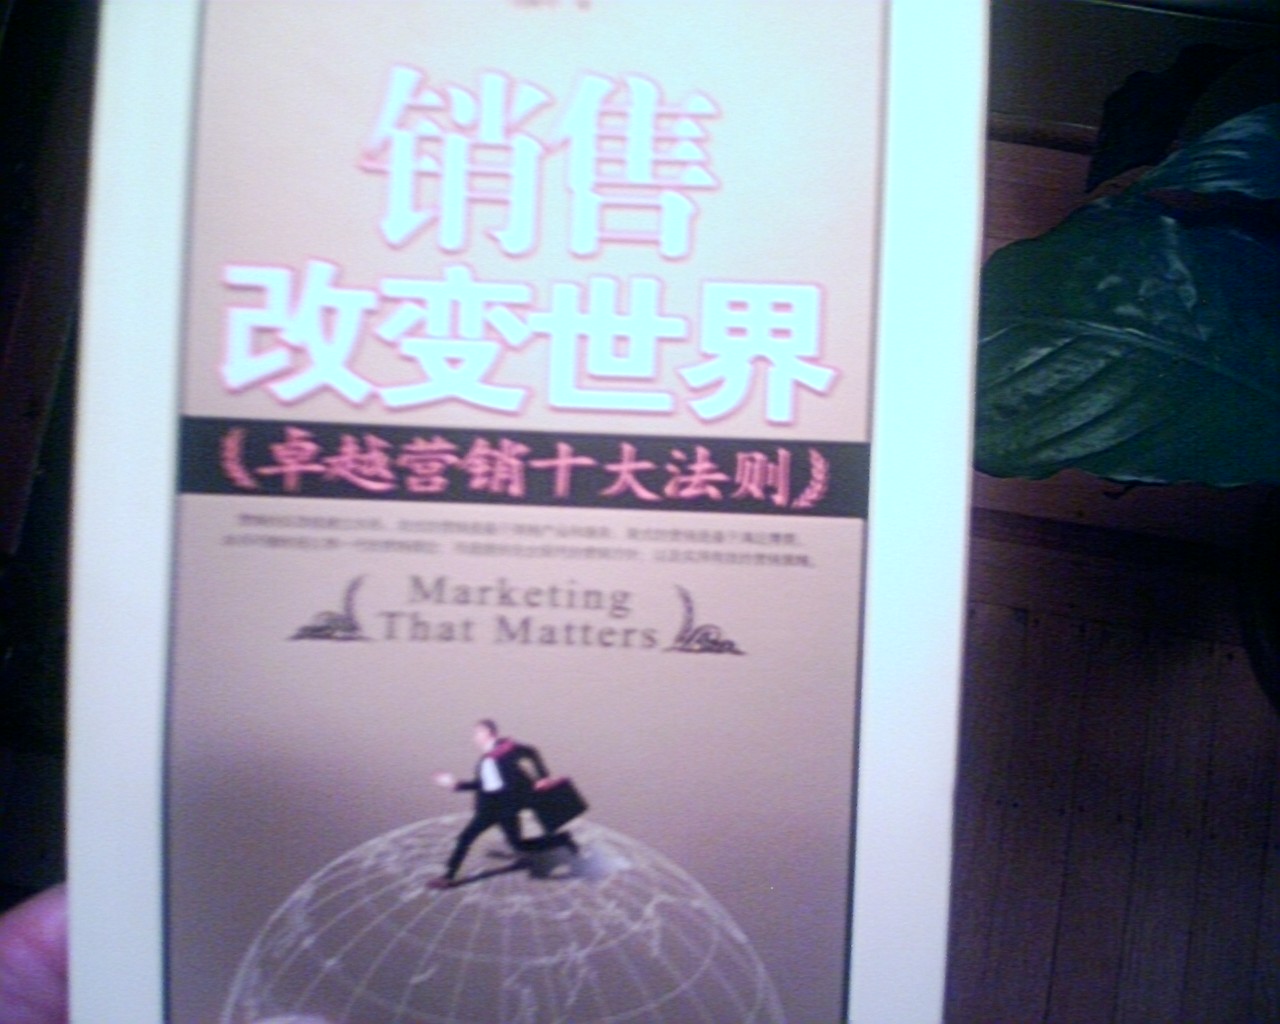 [marketing+that+matters+chinese-740994.jpg]